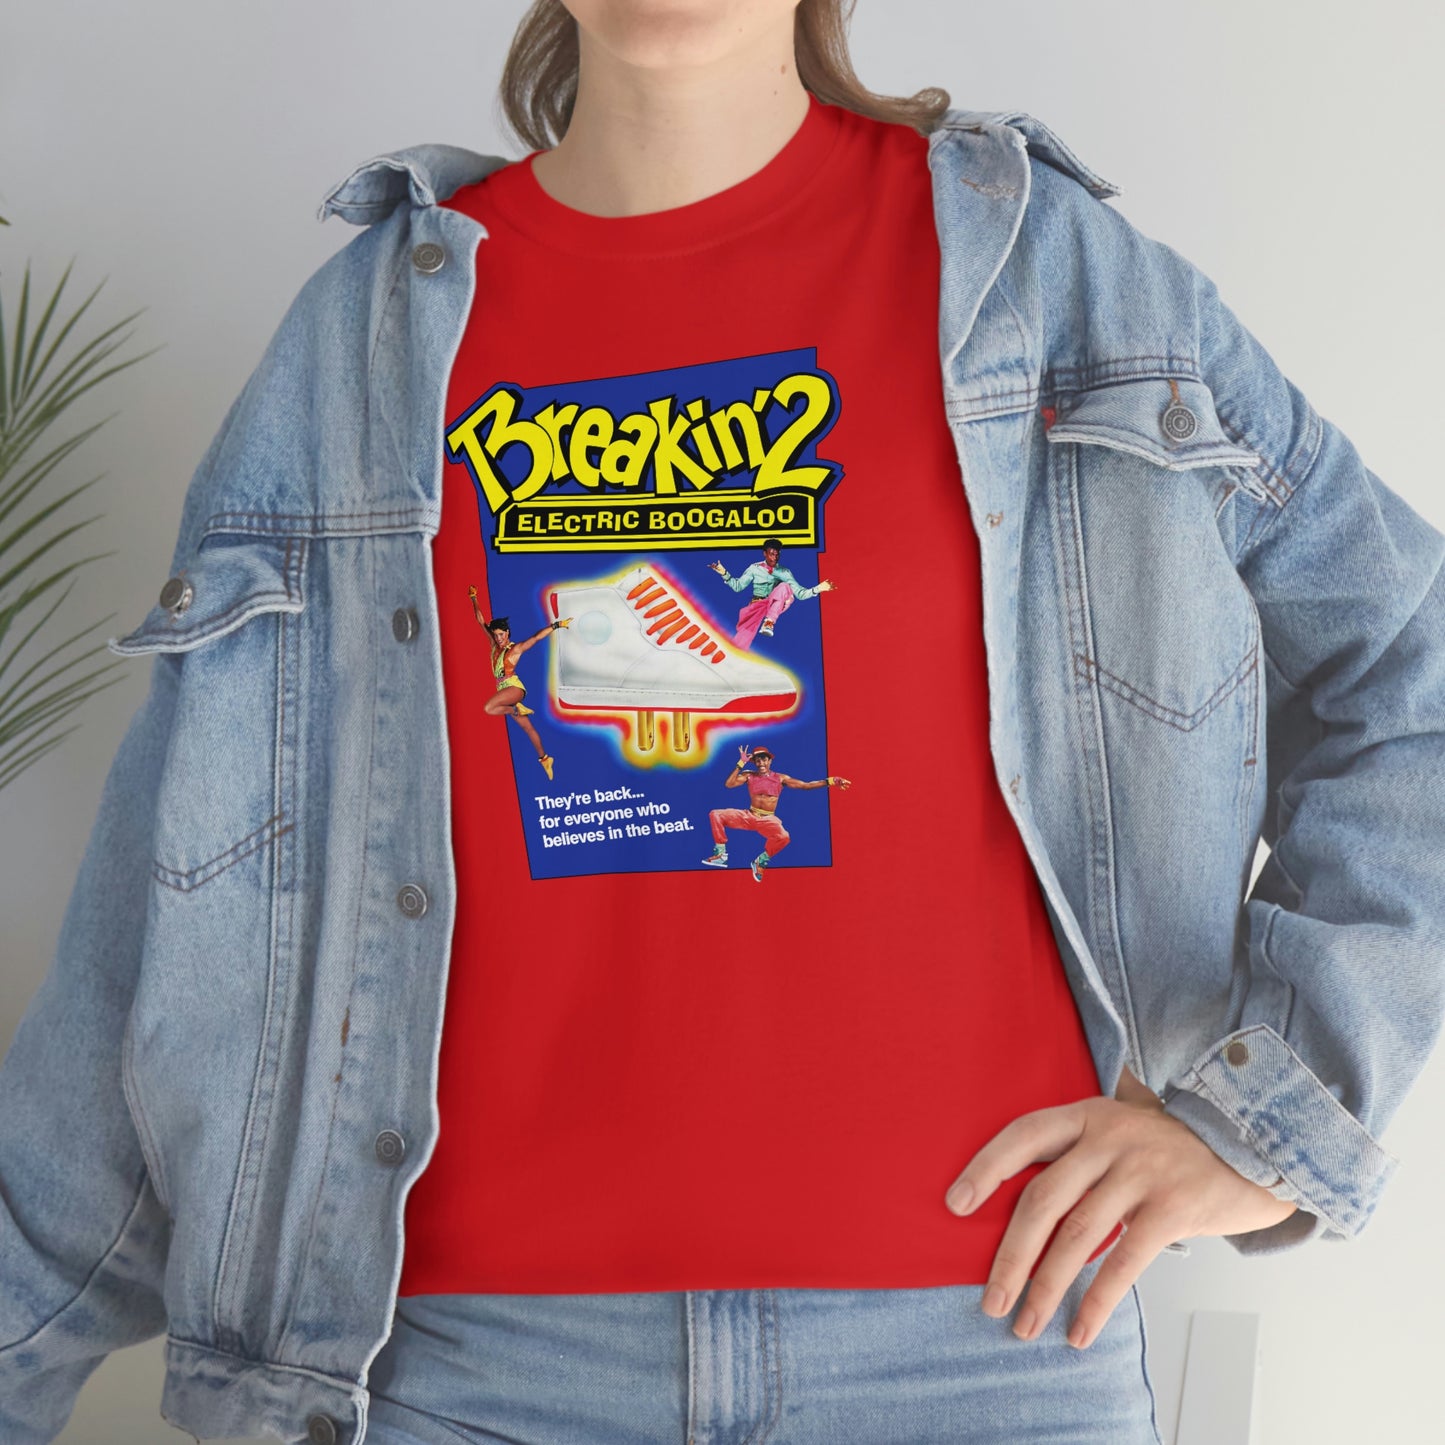 Breakin' 2 Electric Boogaloo T-Shirt